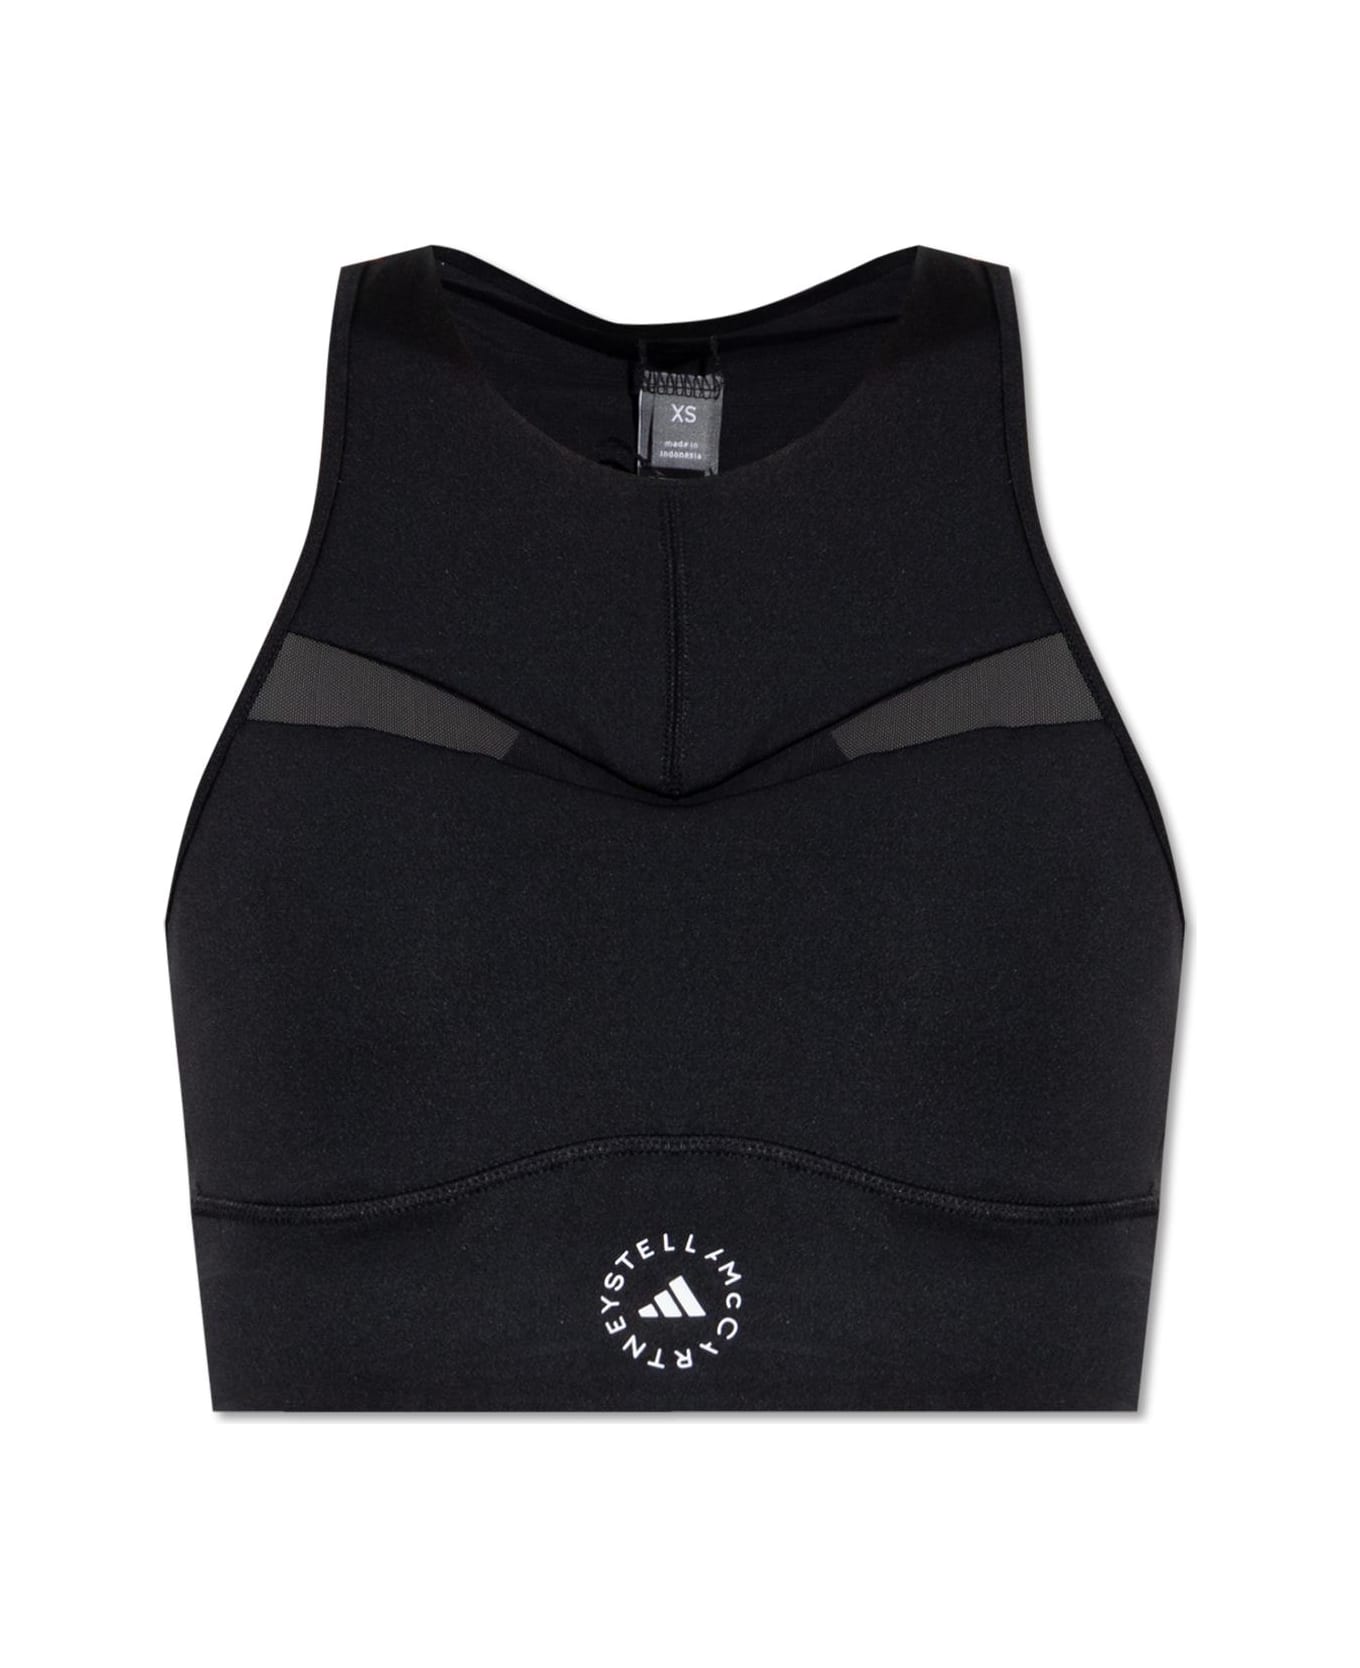 Adidas by Stella McCartney Cropped Tank Top - BLACK